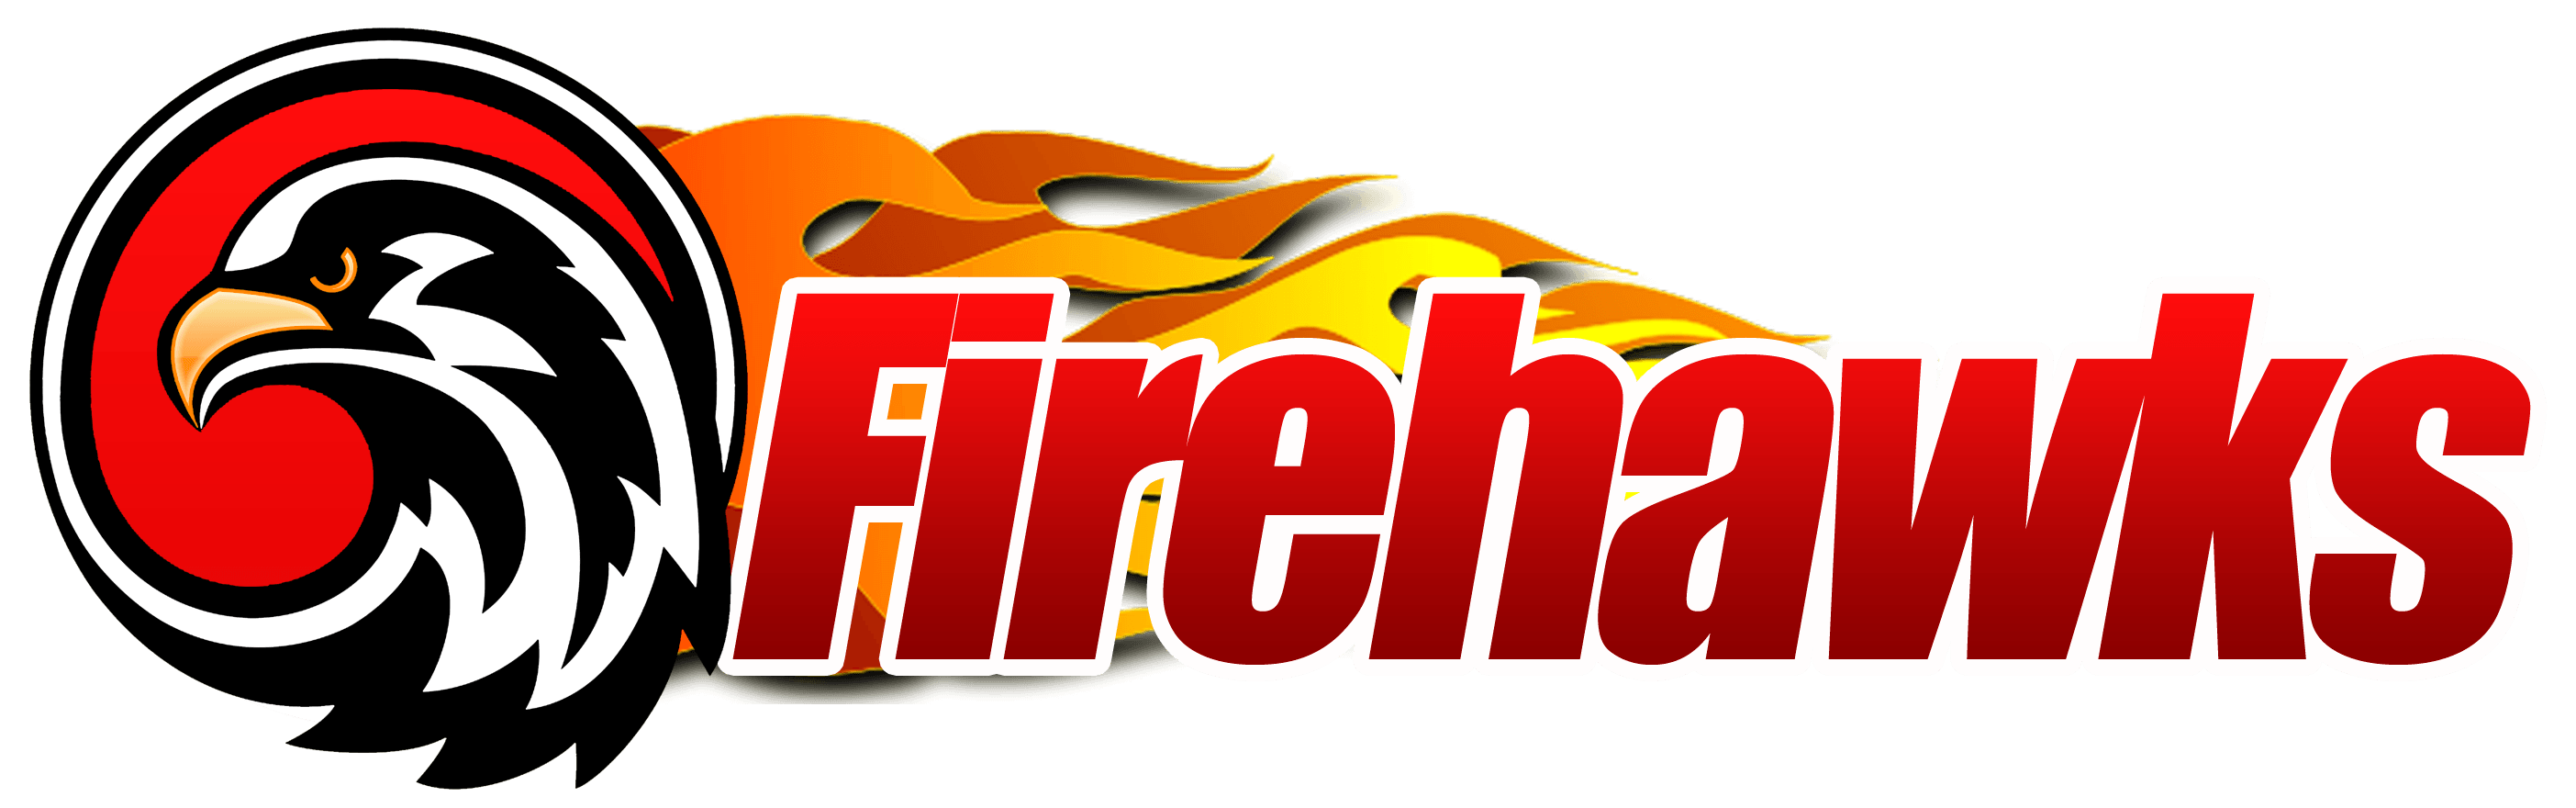 Fire Hawks Logo - Home | Cincinnati Firehawks Baseball